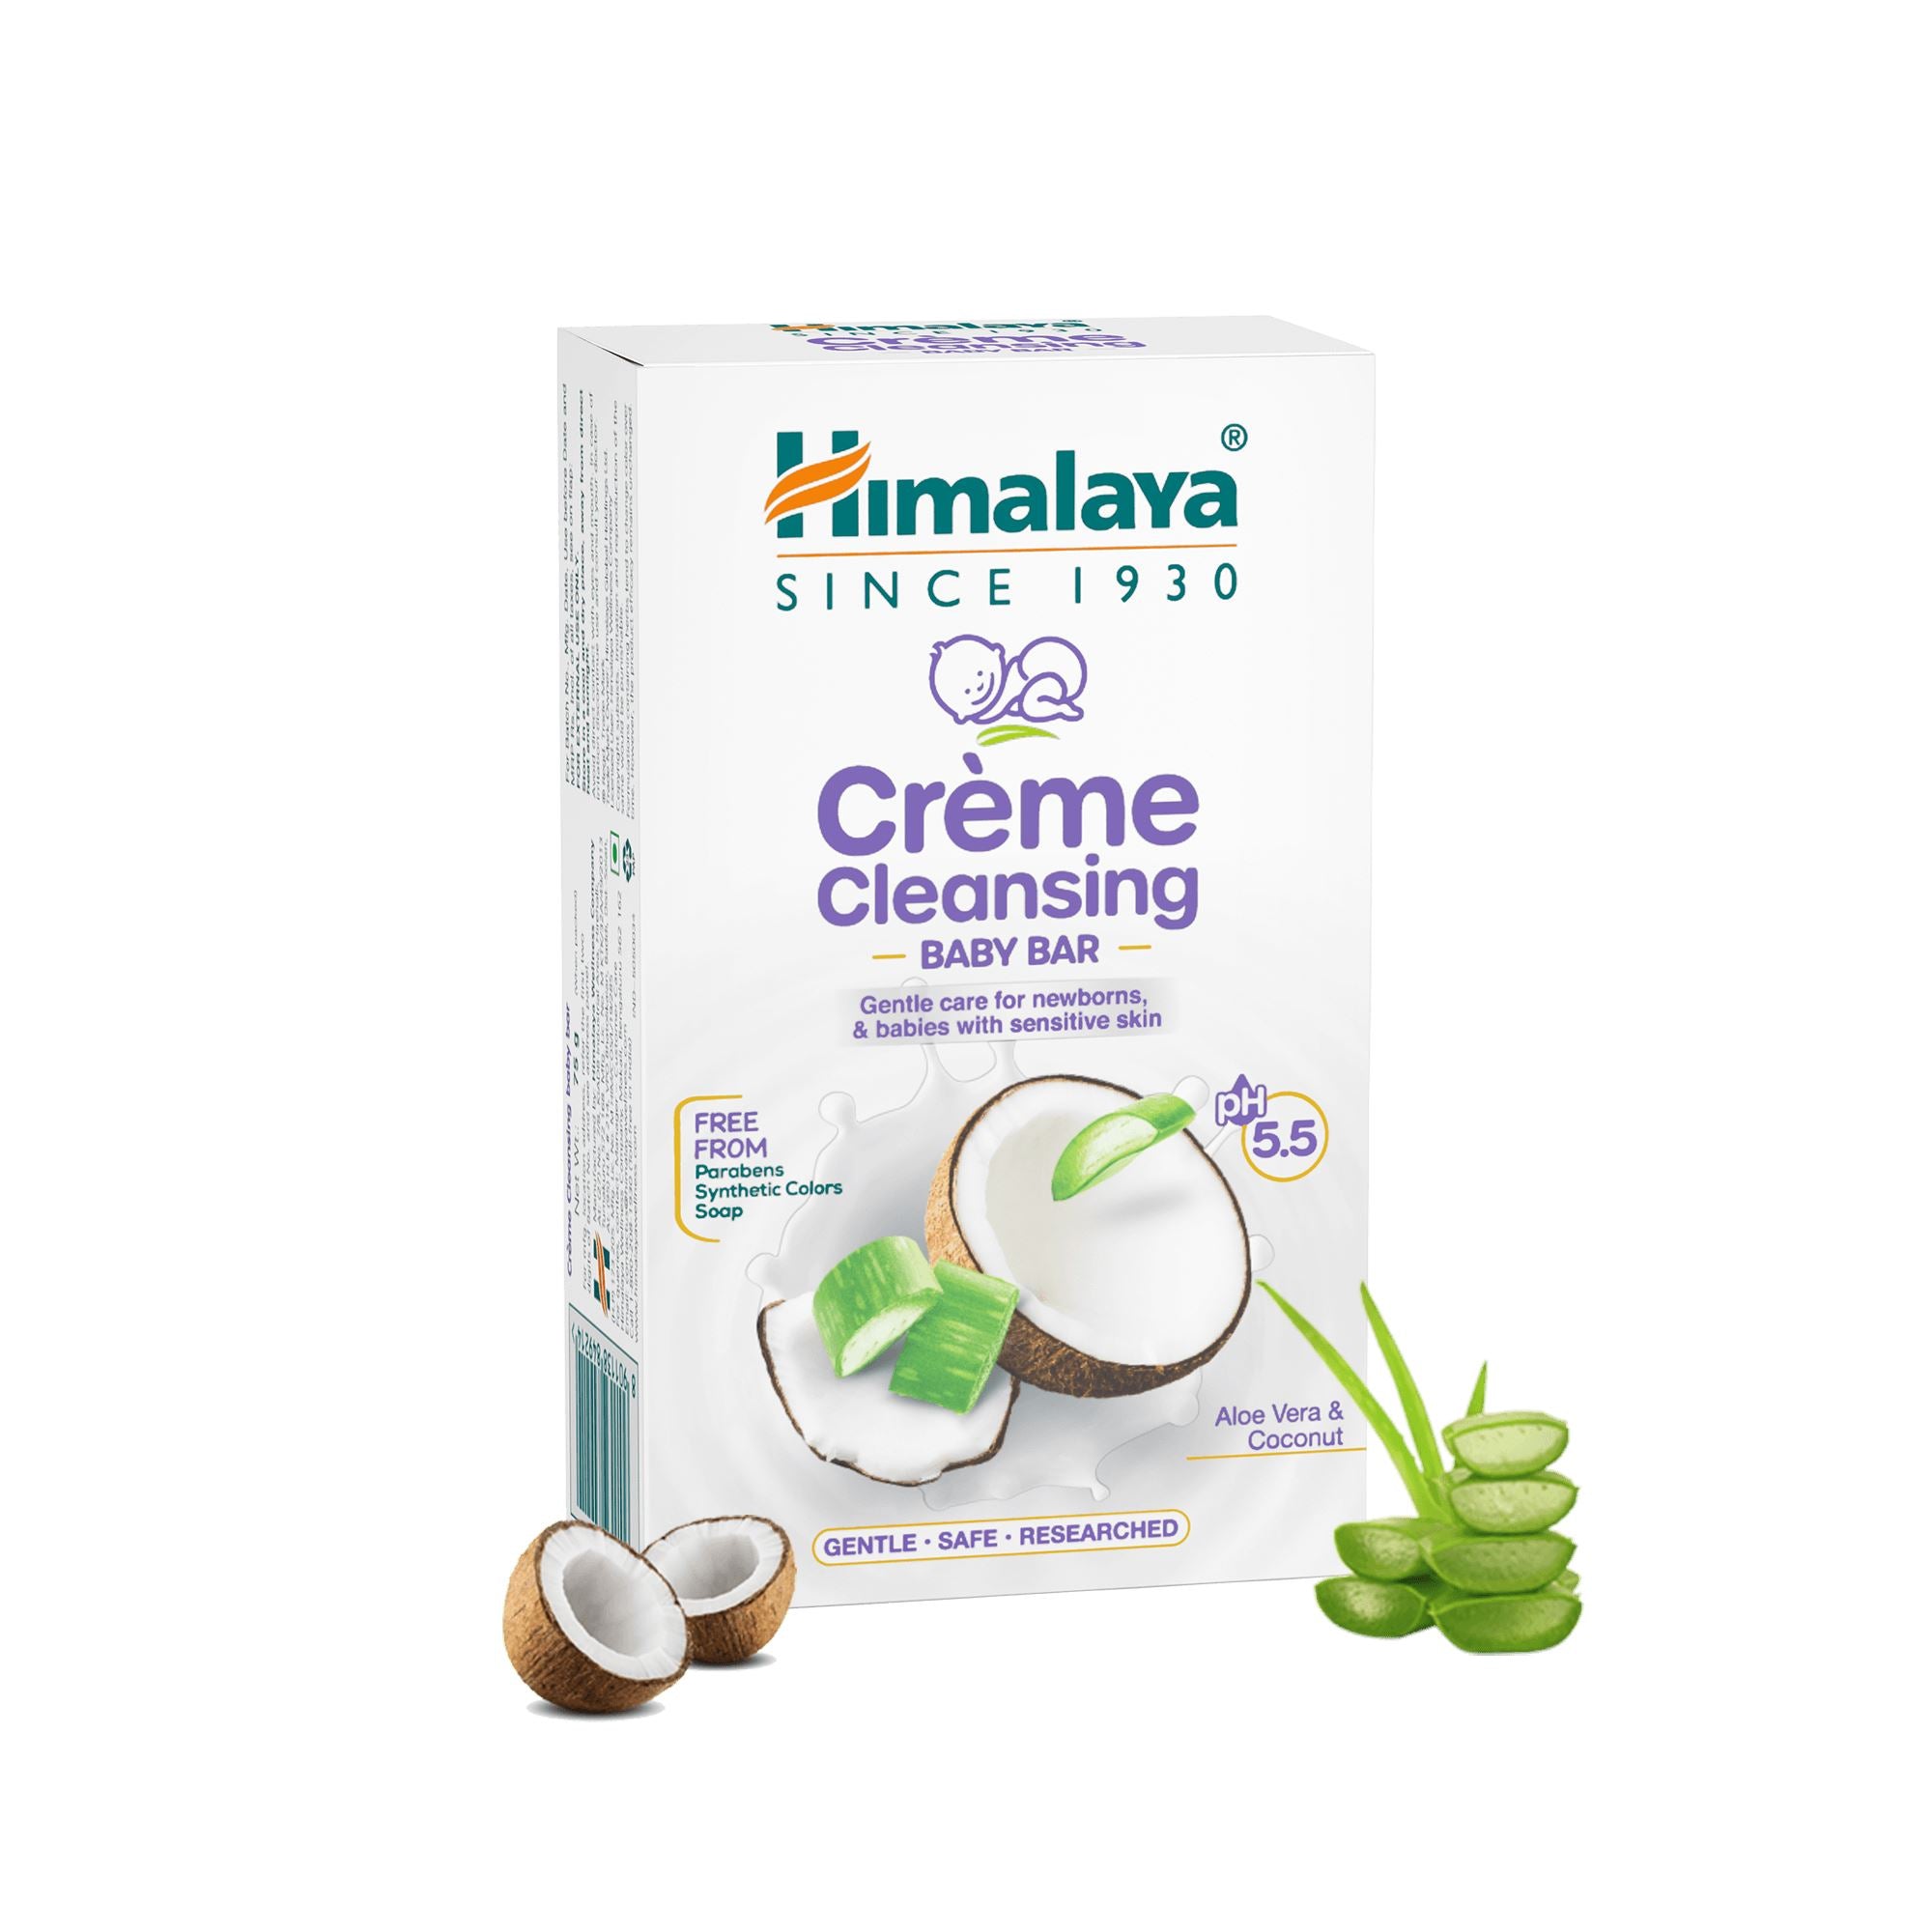  Himalaya Crème Cleansing Baby Bar 75g